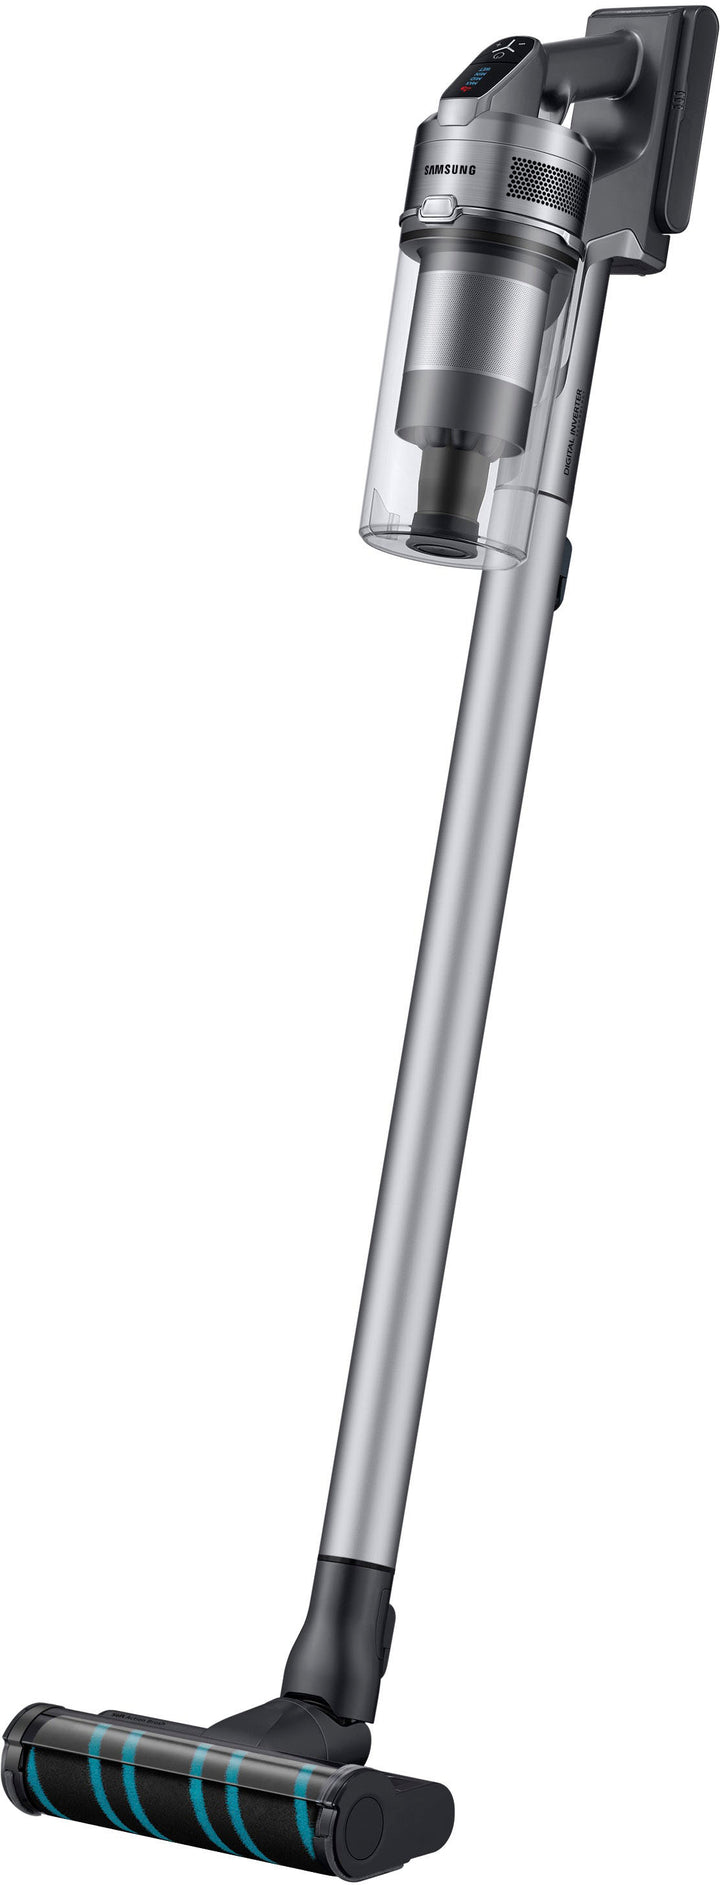 Samsung - Jet™ 75+ Cordless Stick Vacuum with Additional Battery - Titan ChroMetal_11